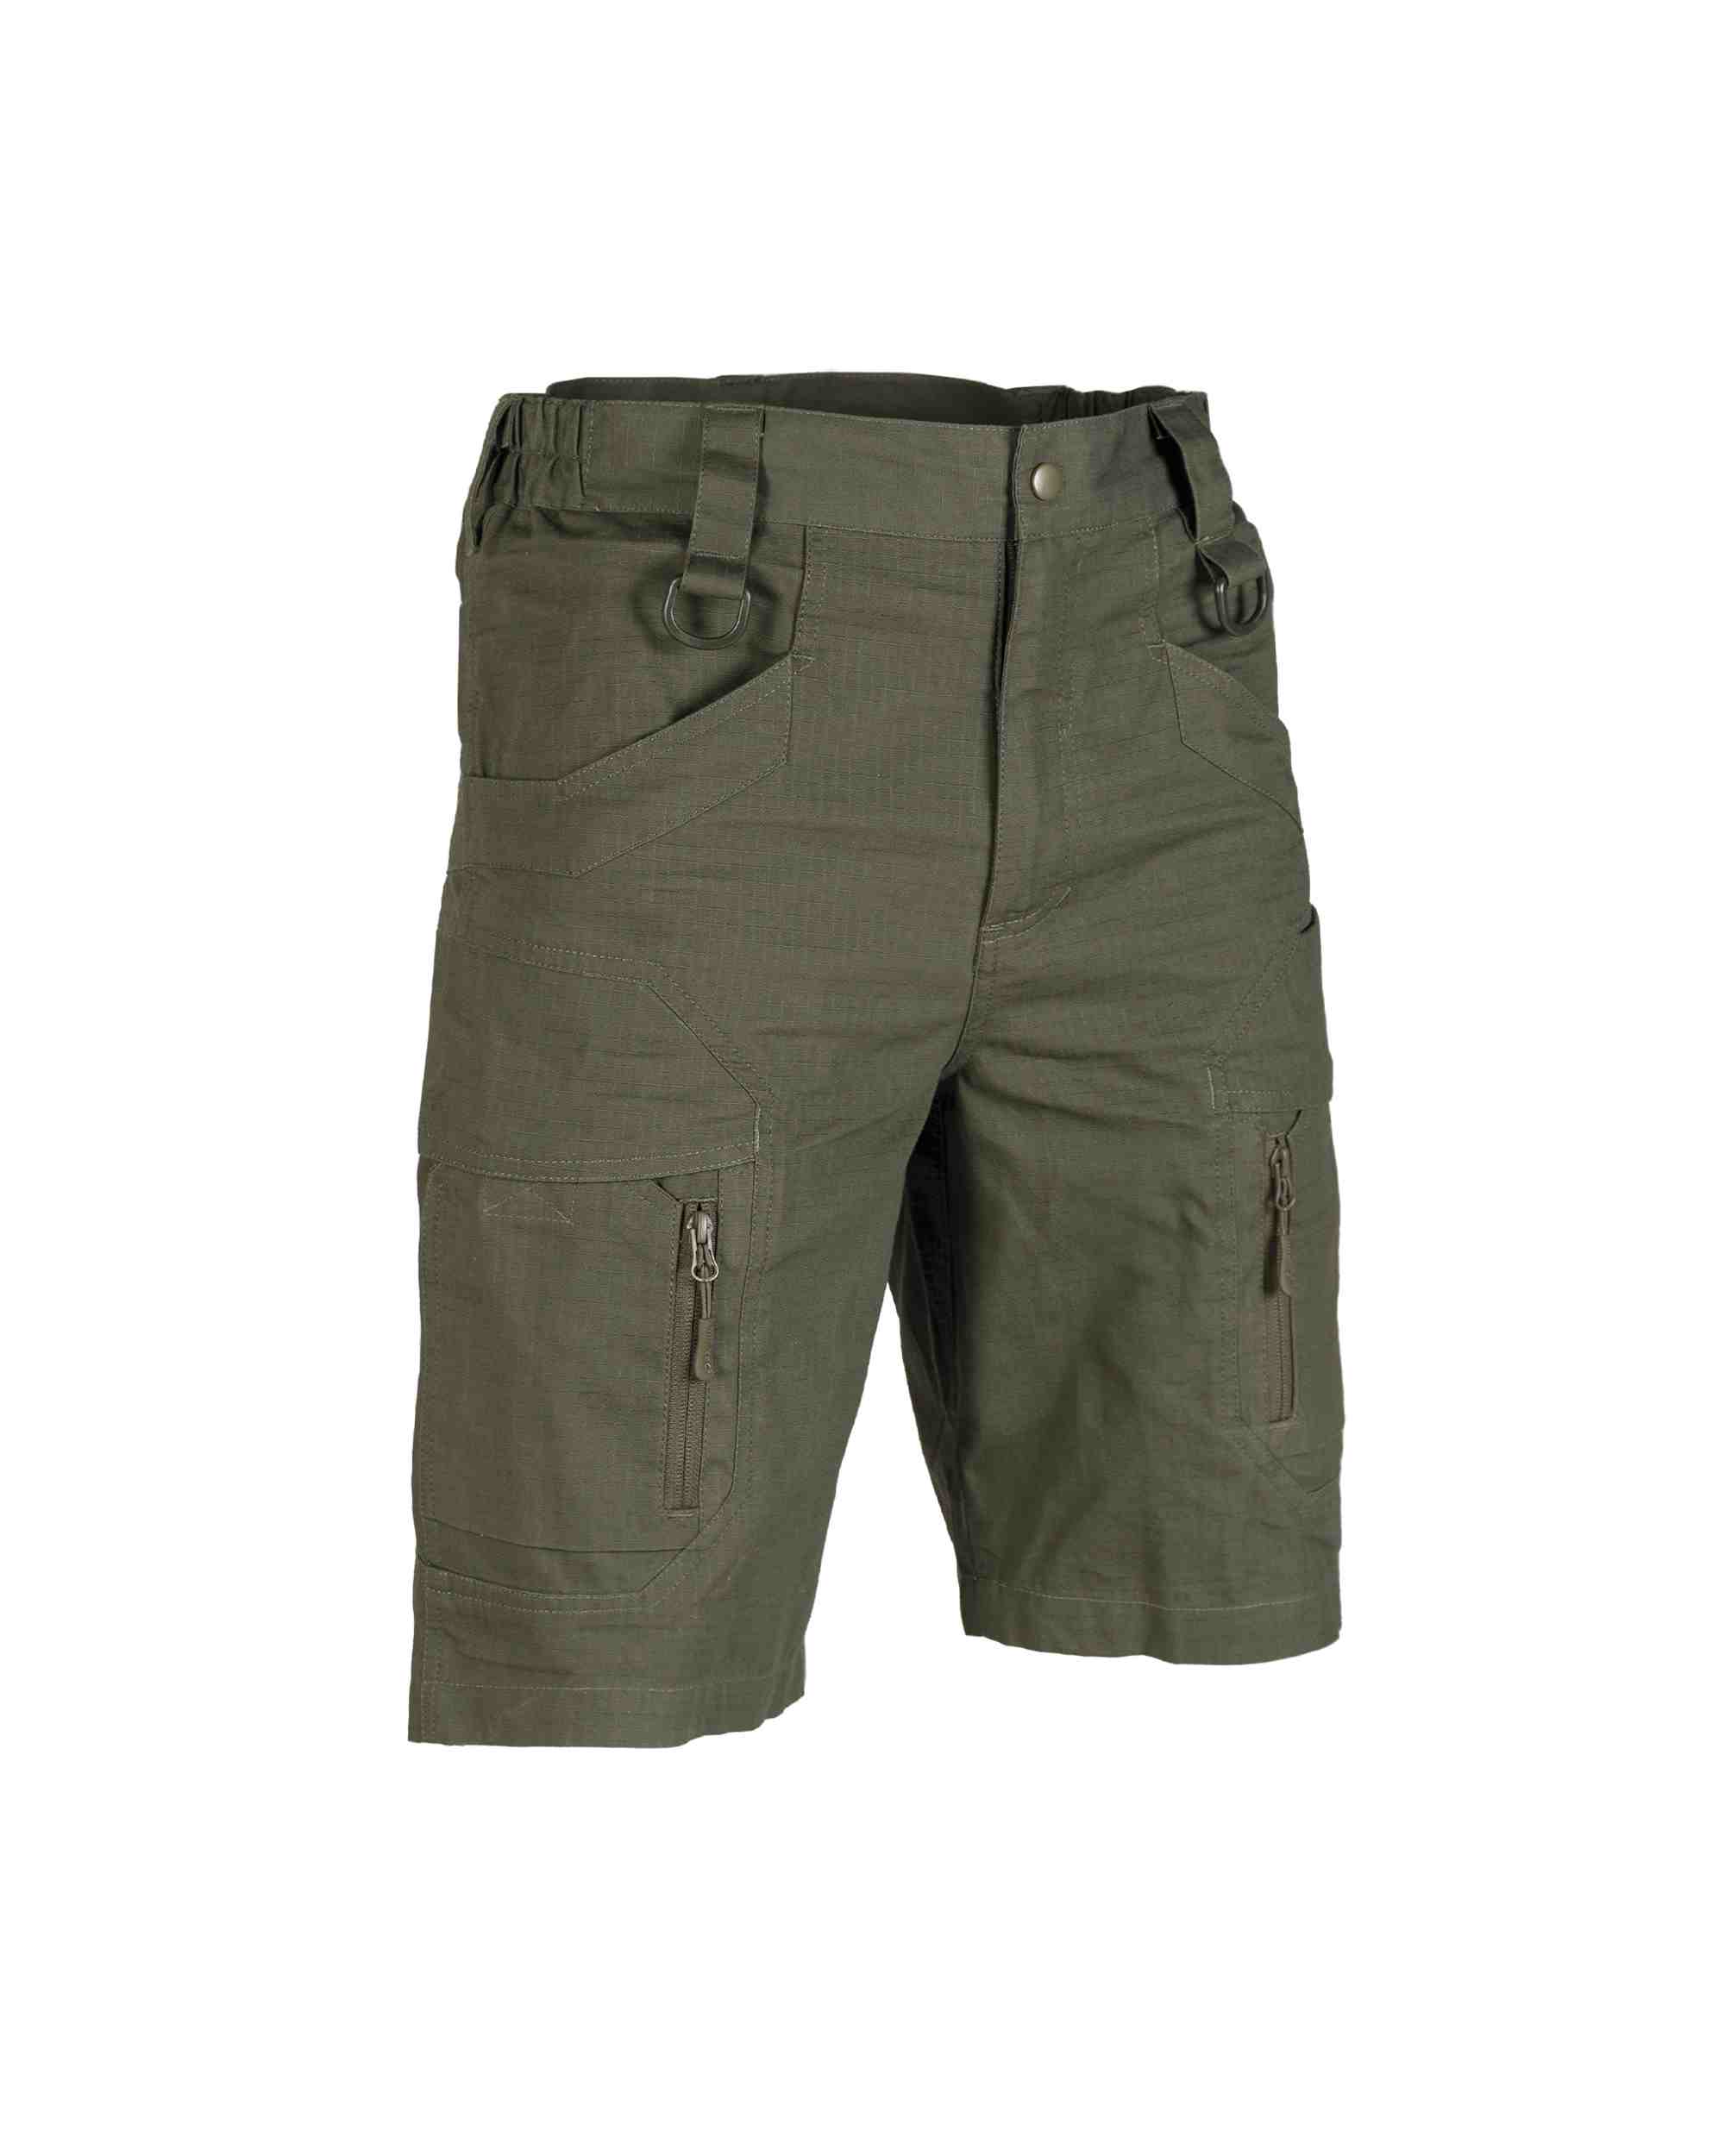 Assault Shorts R/S Baumwolle Oliv